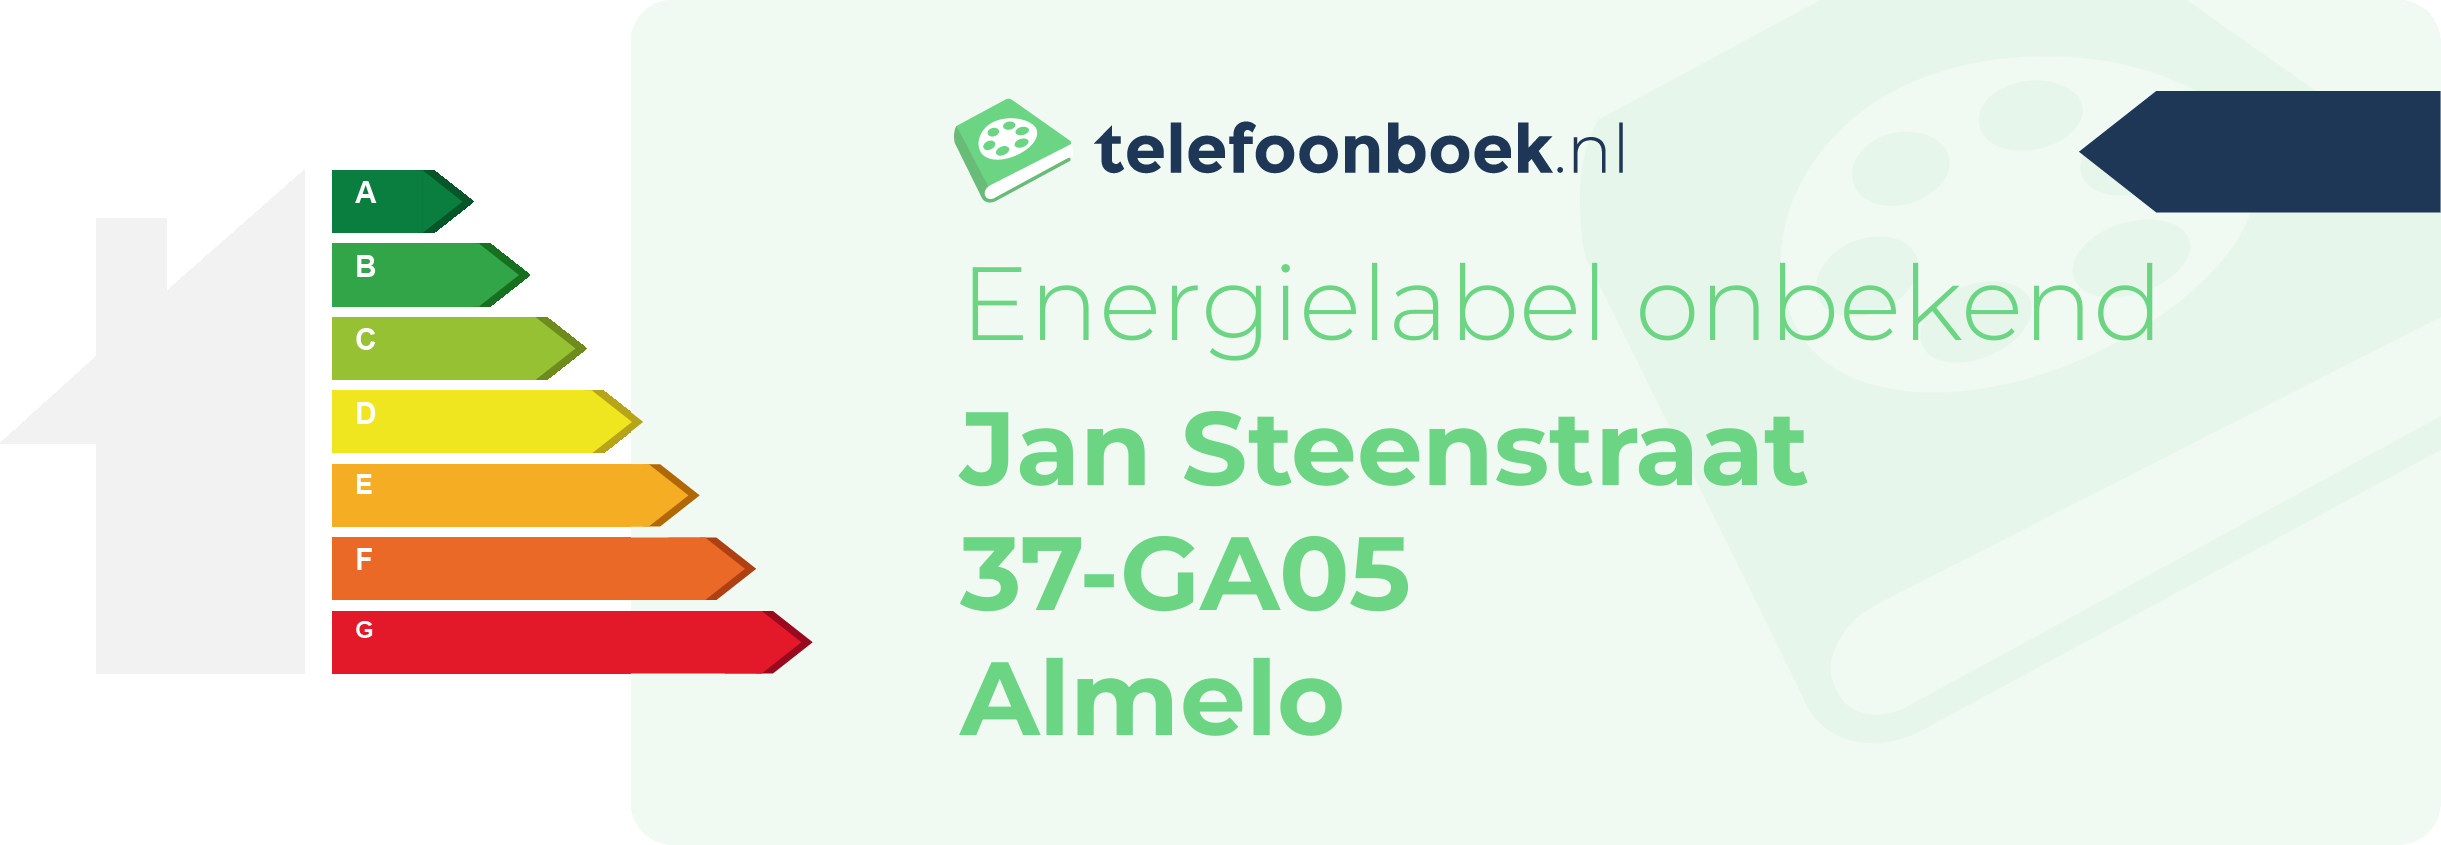 Energielabel Jan Steenstraat 37-GA05 Almelo